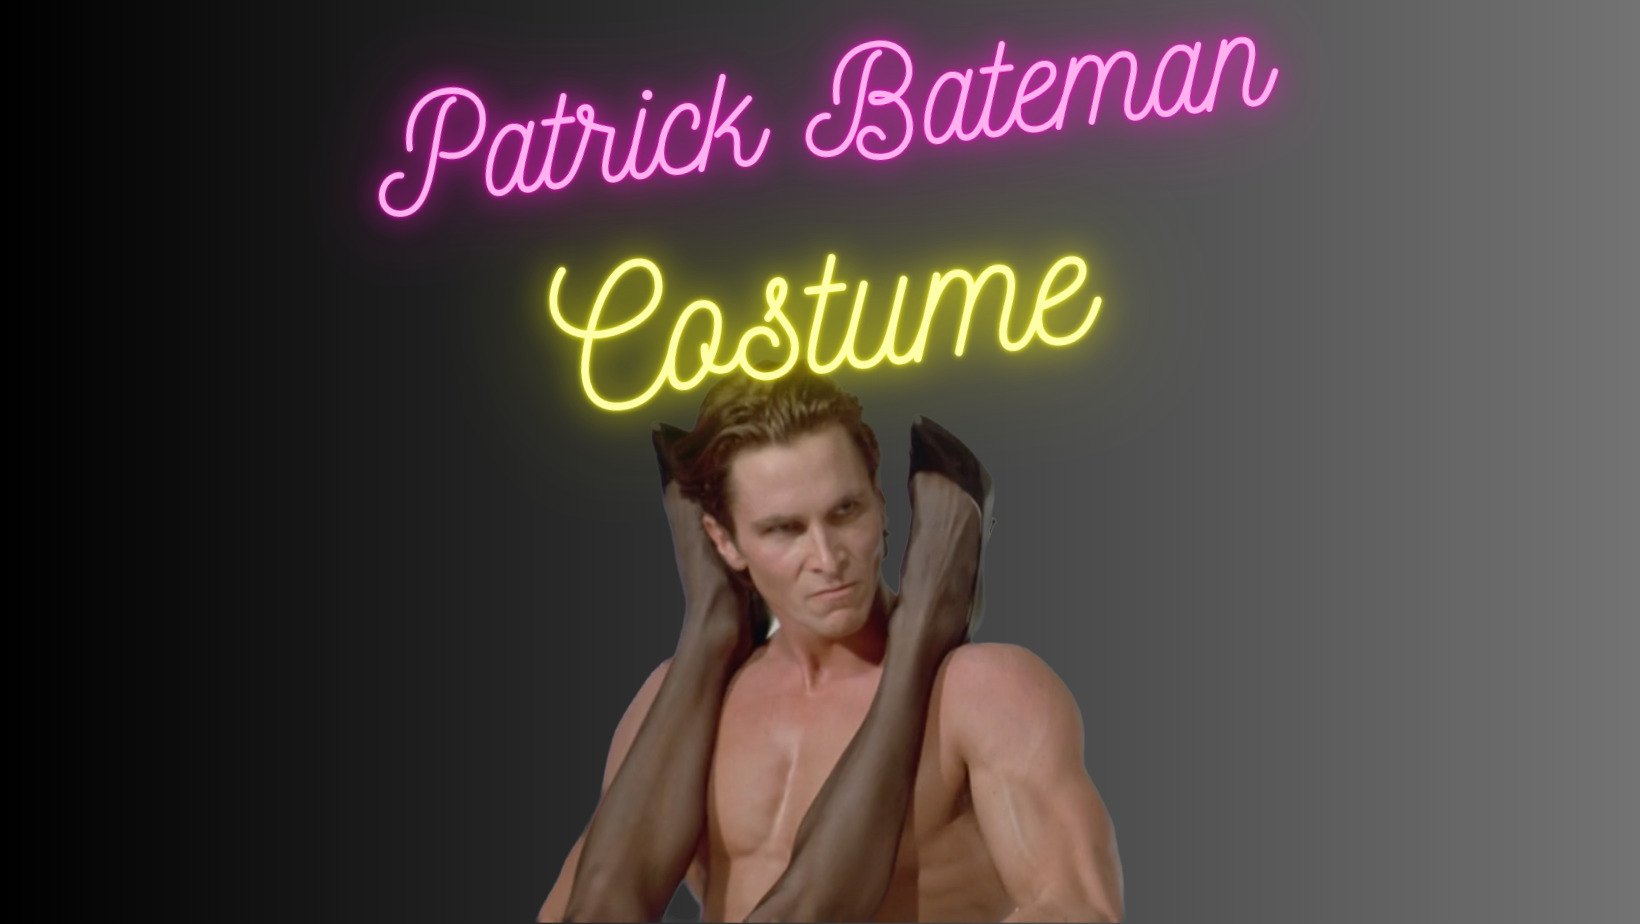 Patrick Bateman costume